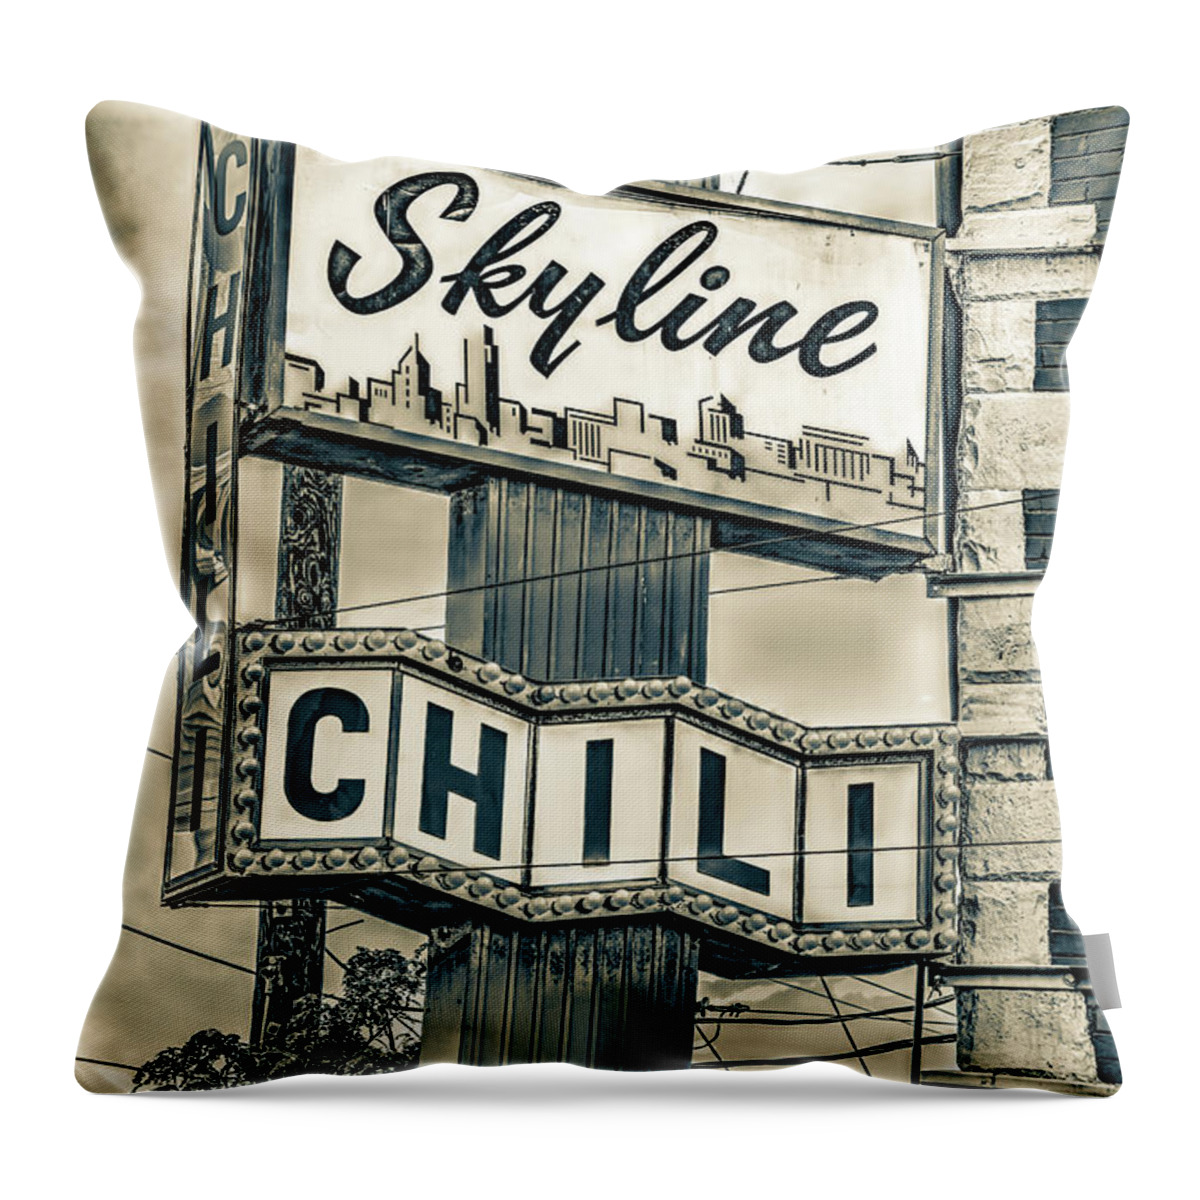 Cincinnati Skyline Throw Pillow featuring the photograph Cincinnati Skyline Chili Sign - Sepia by Gregory Ballos